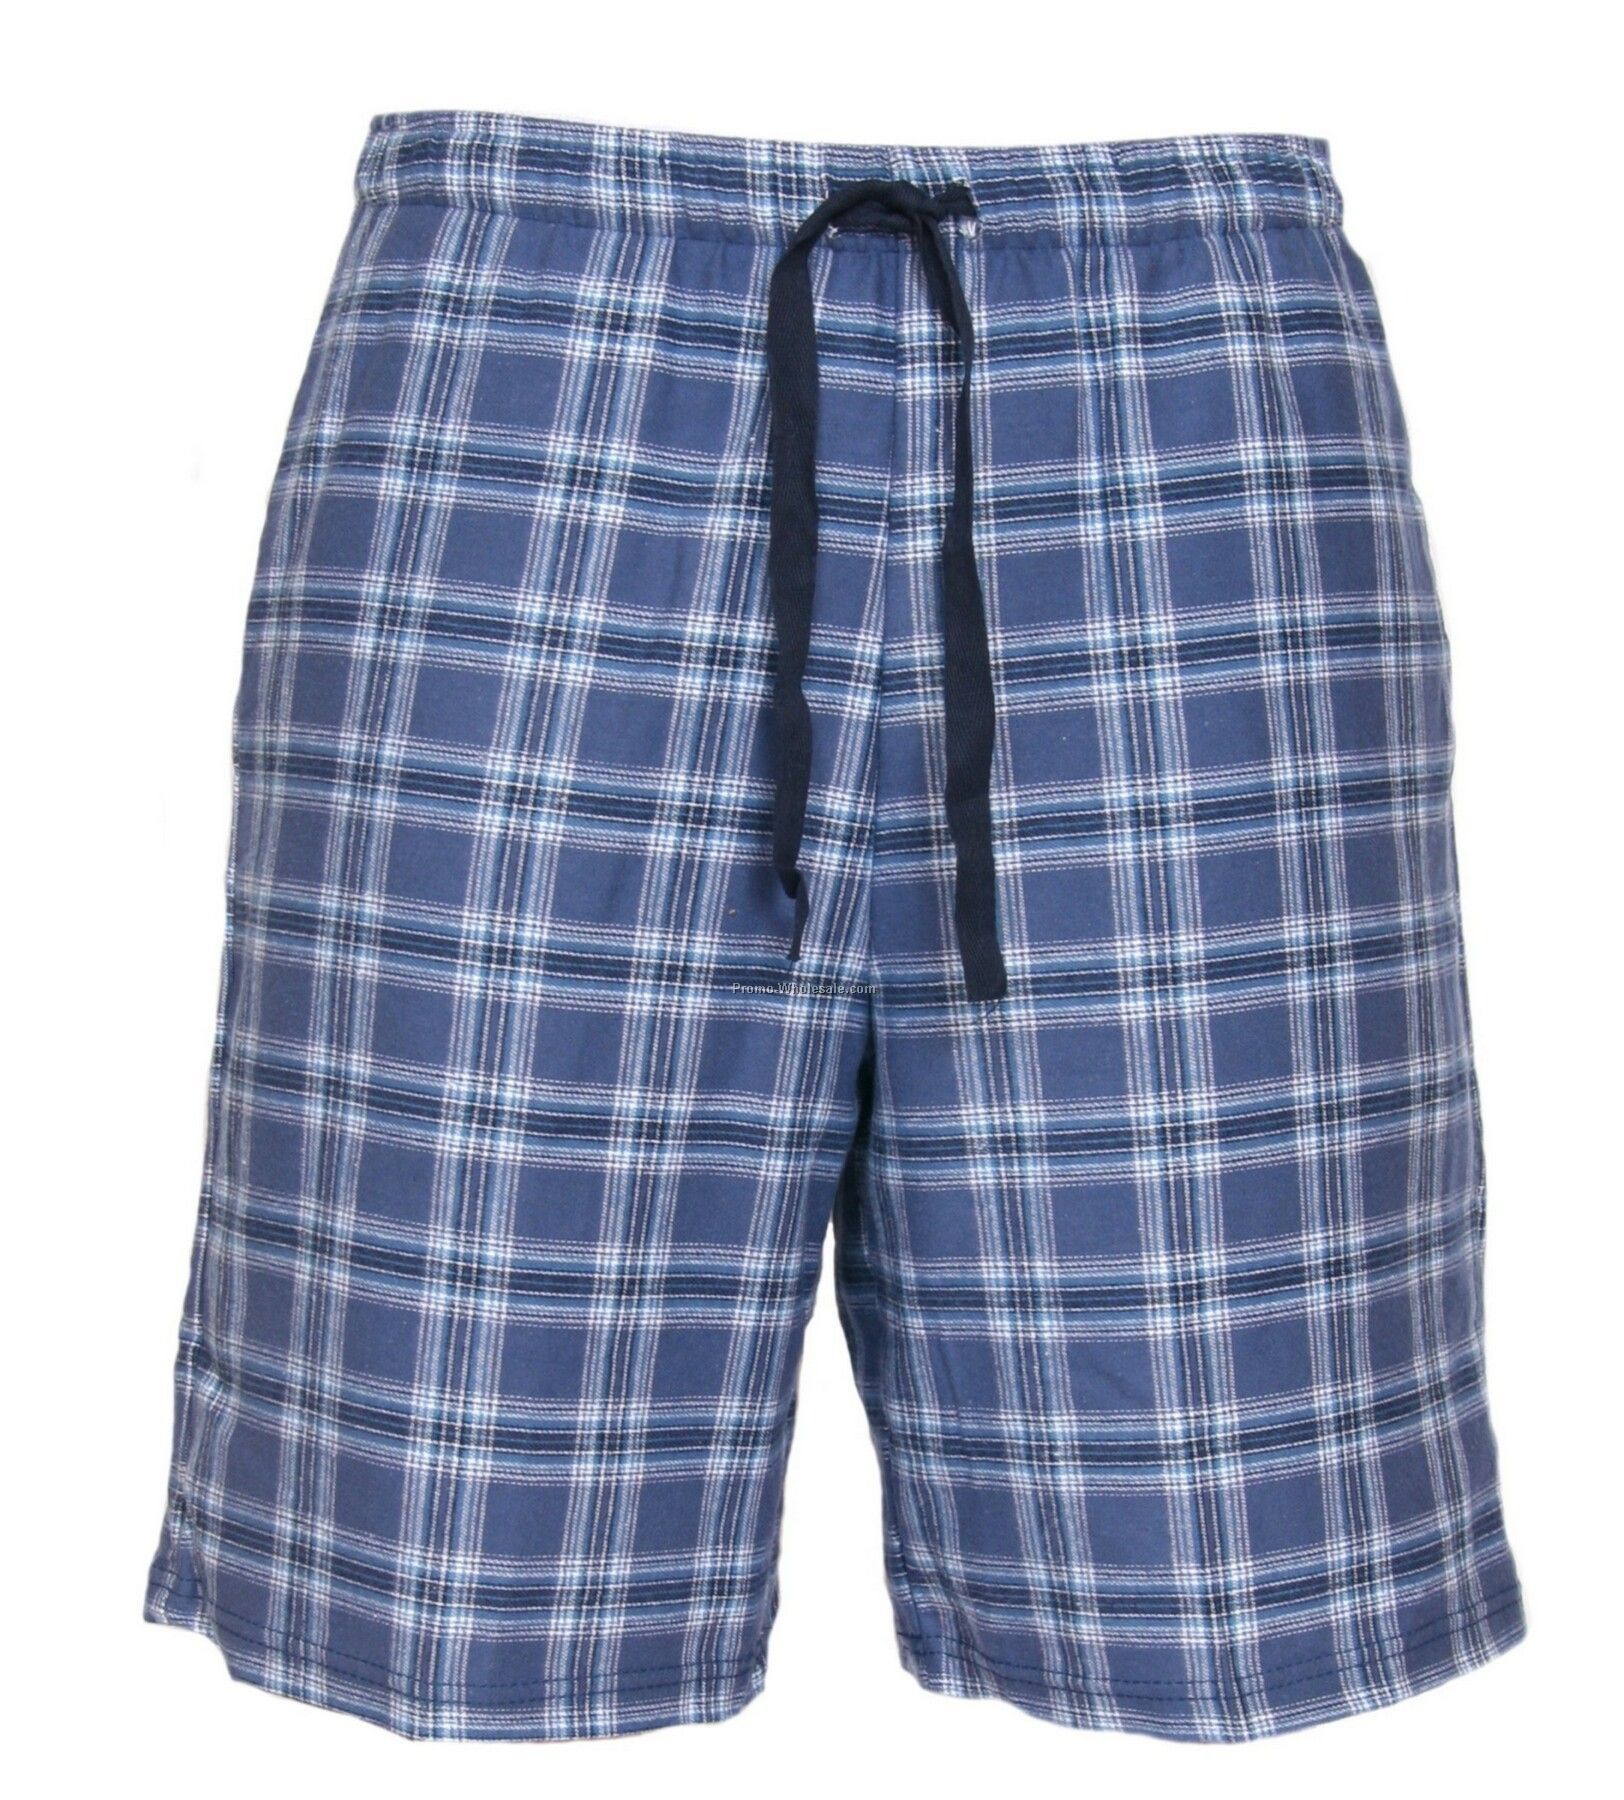 Adults' Royal Blue/ White Flannel Dorm Shorts (S-xl)